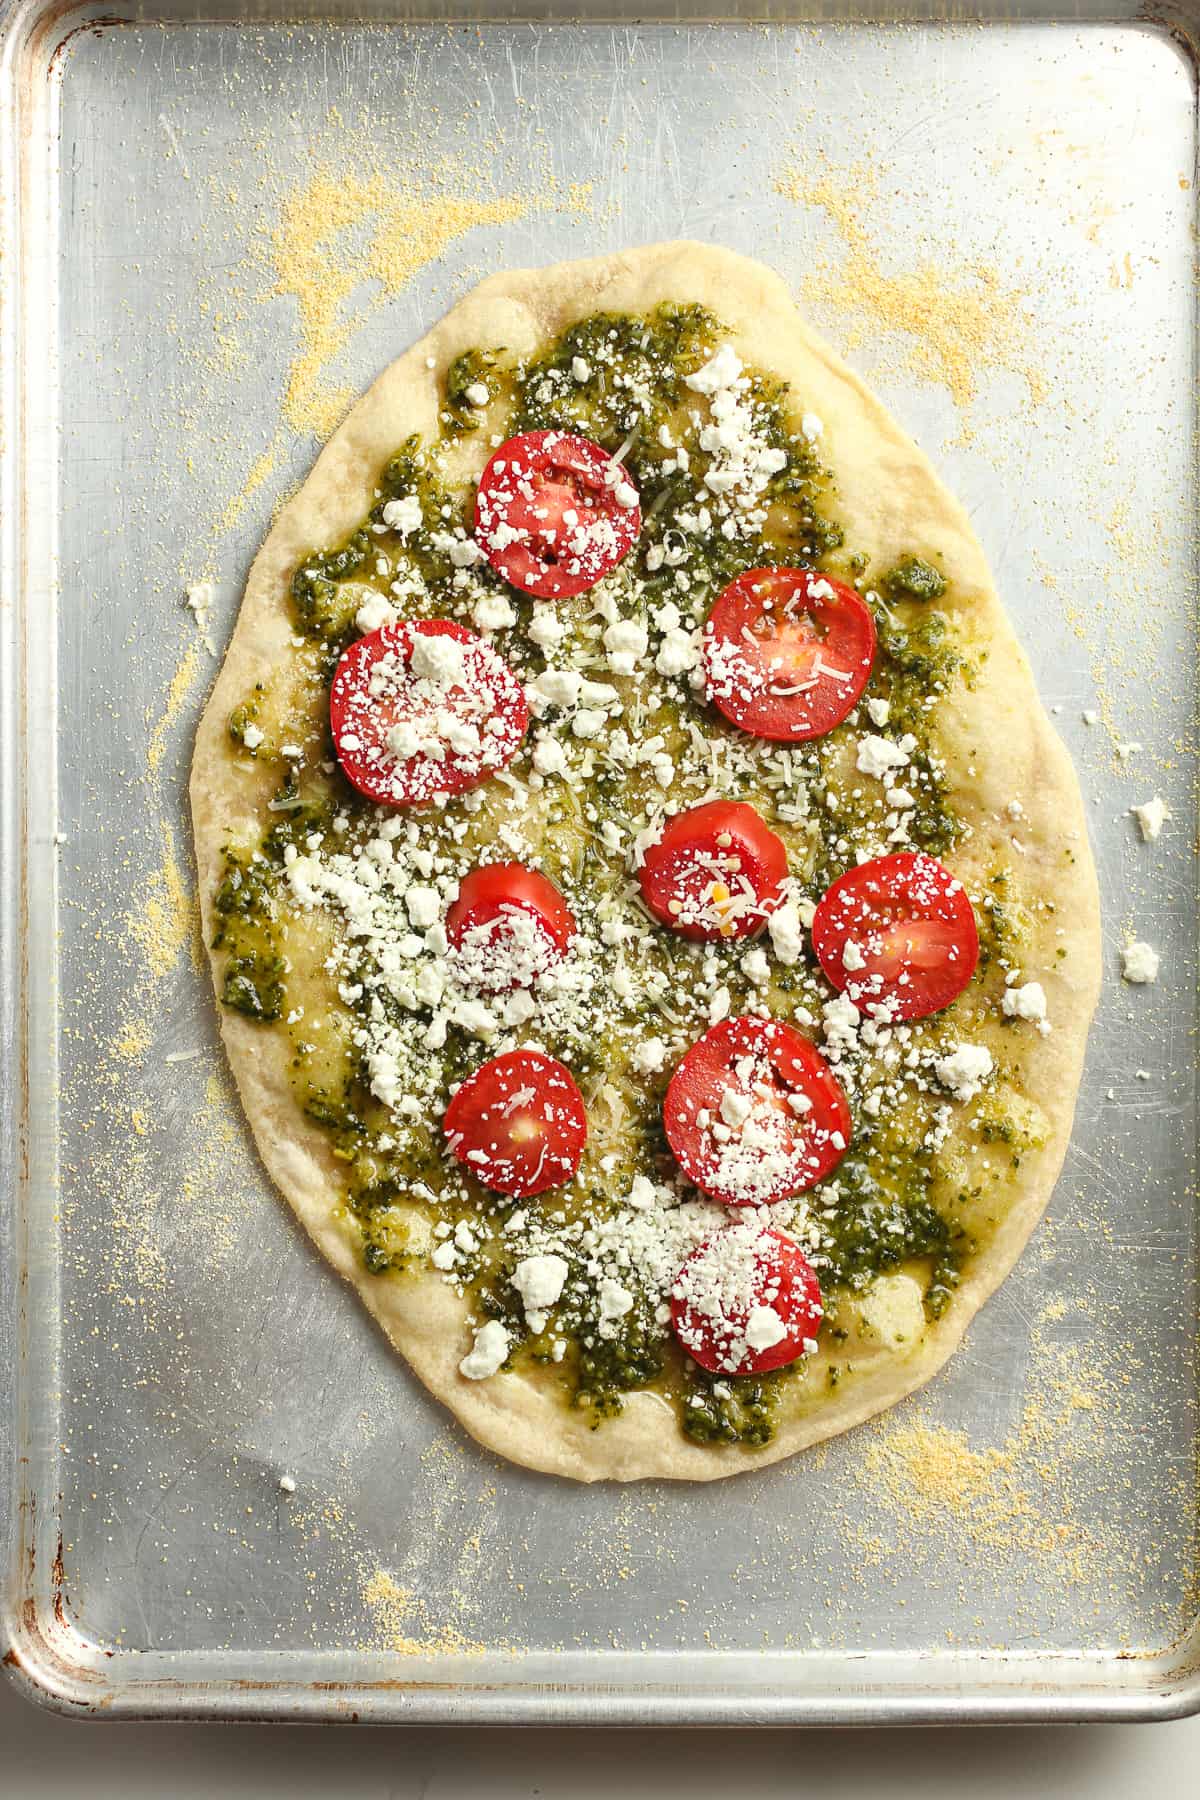 Pesto flatbread pizza on a pan before baking.